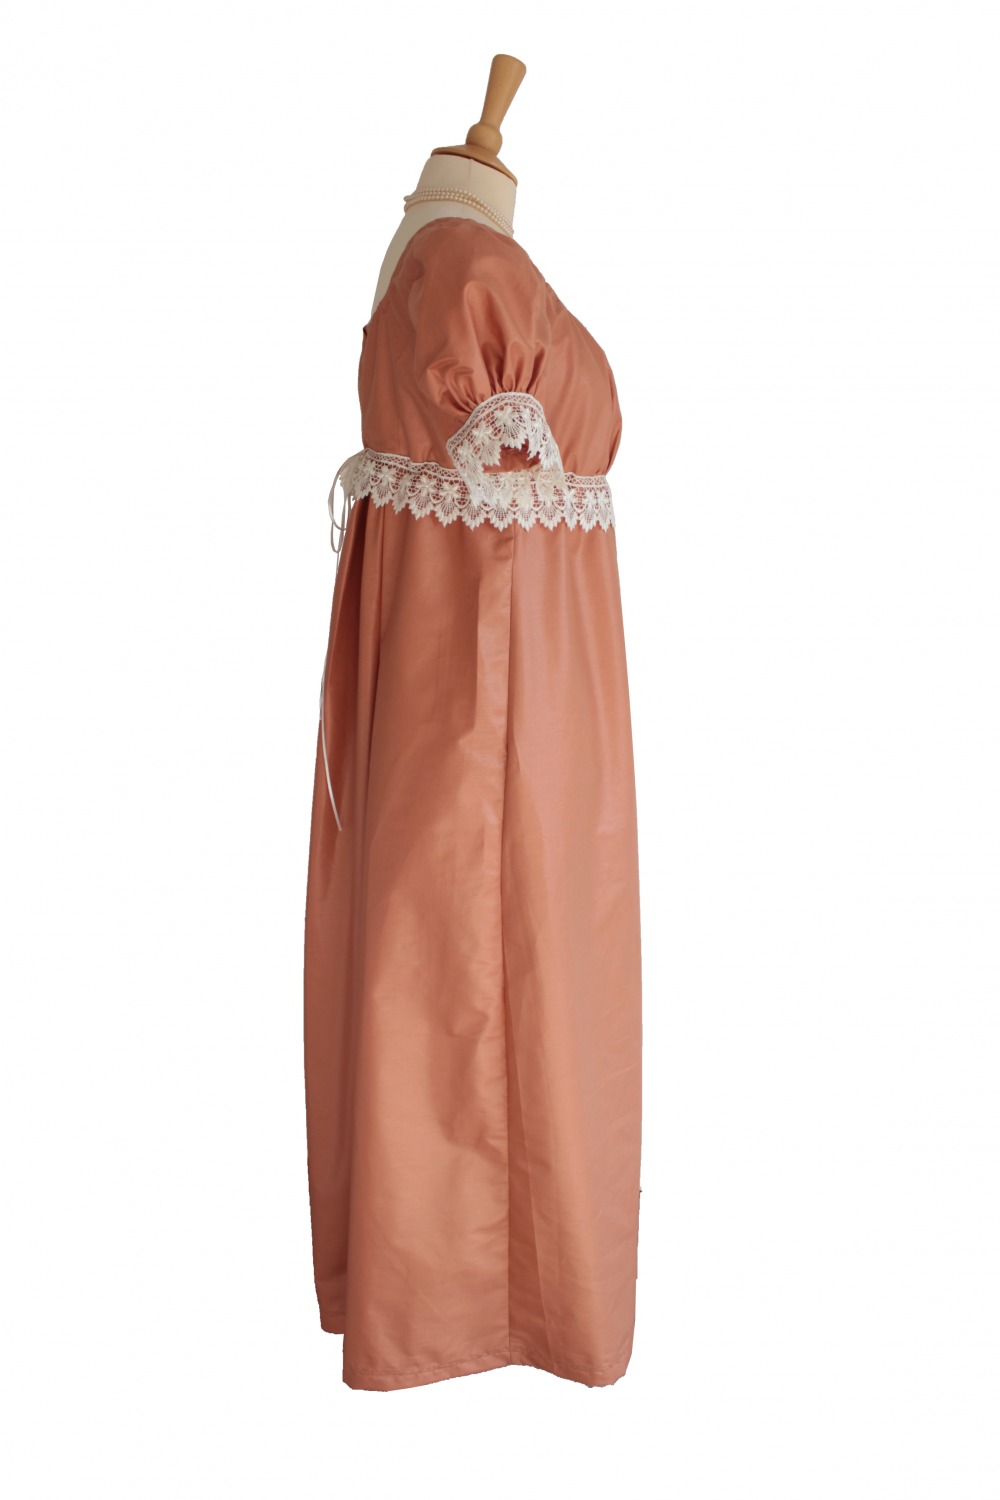 Ladies Petite 18th 19th Regency Jane Austen Day Costume Size 14 - 16 Image